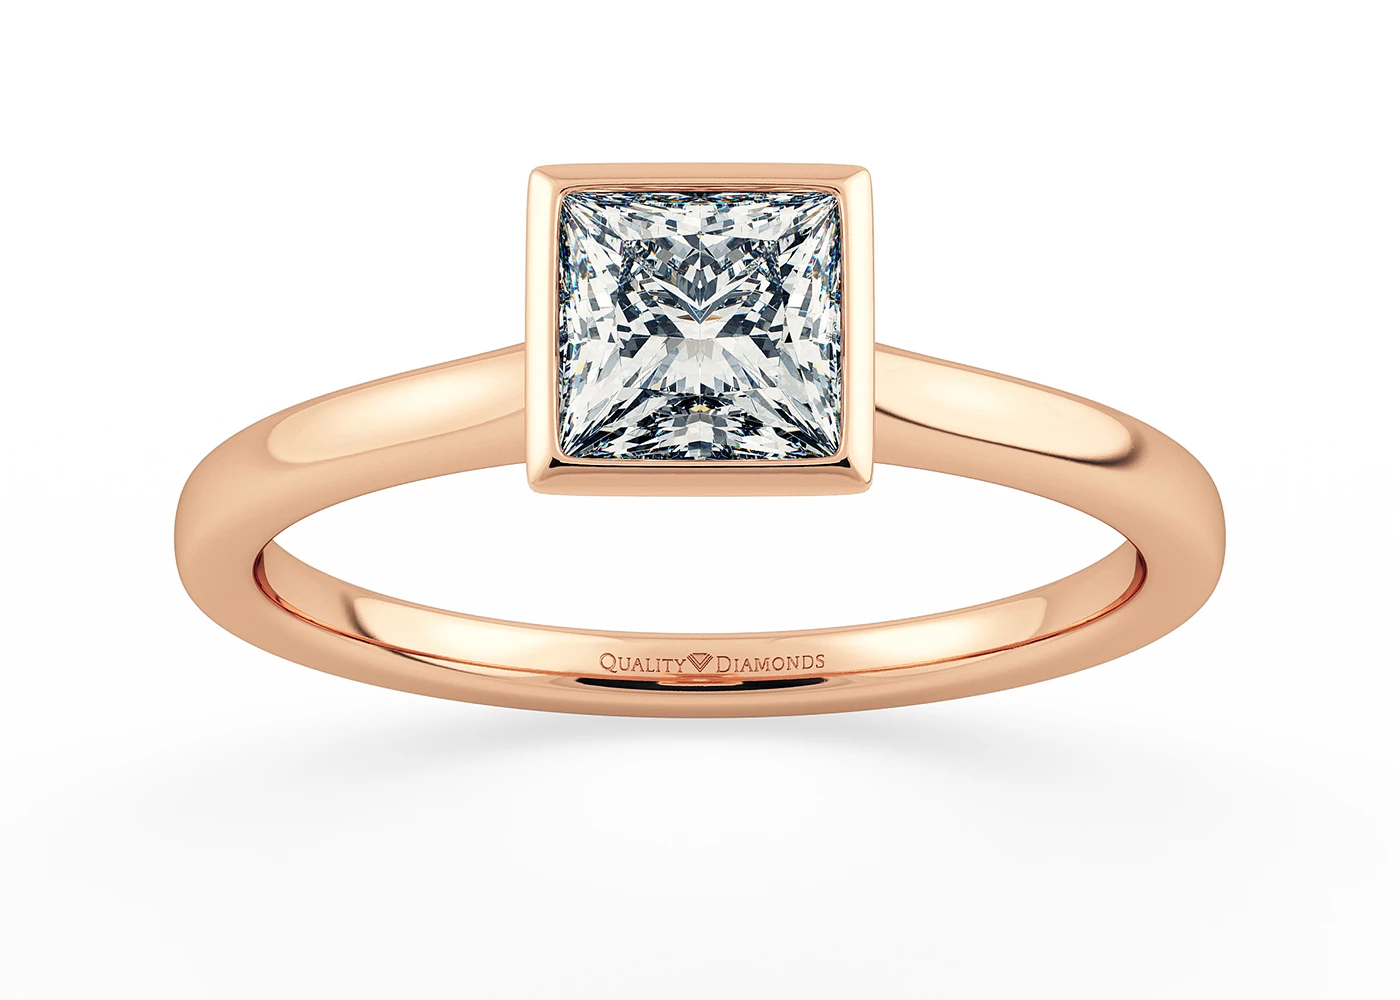 Princess Carina Diamond Ring in 18K Rose Gold